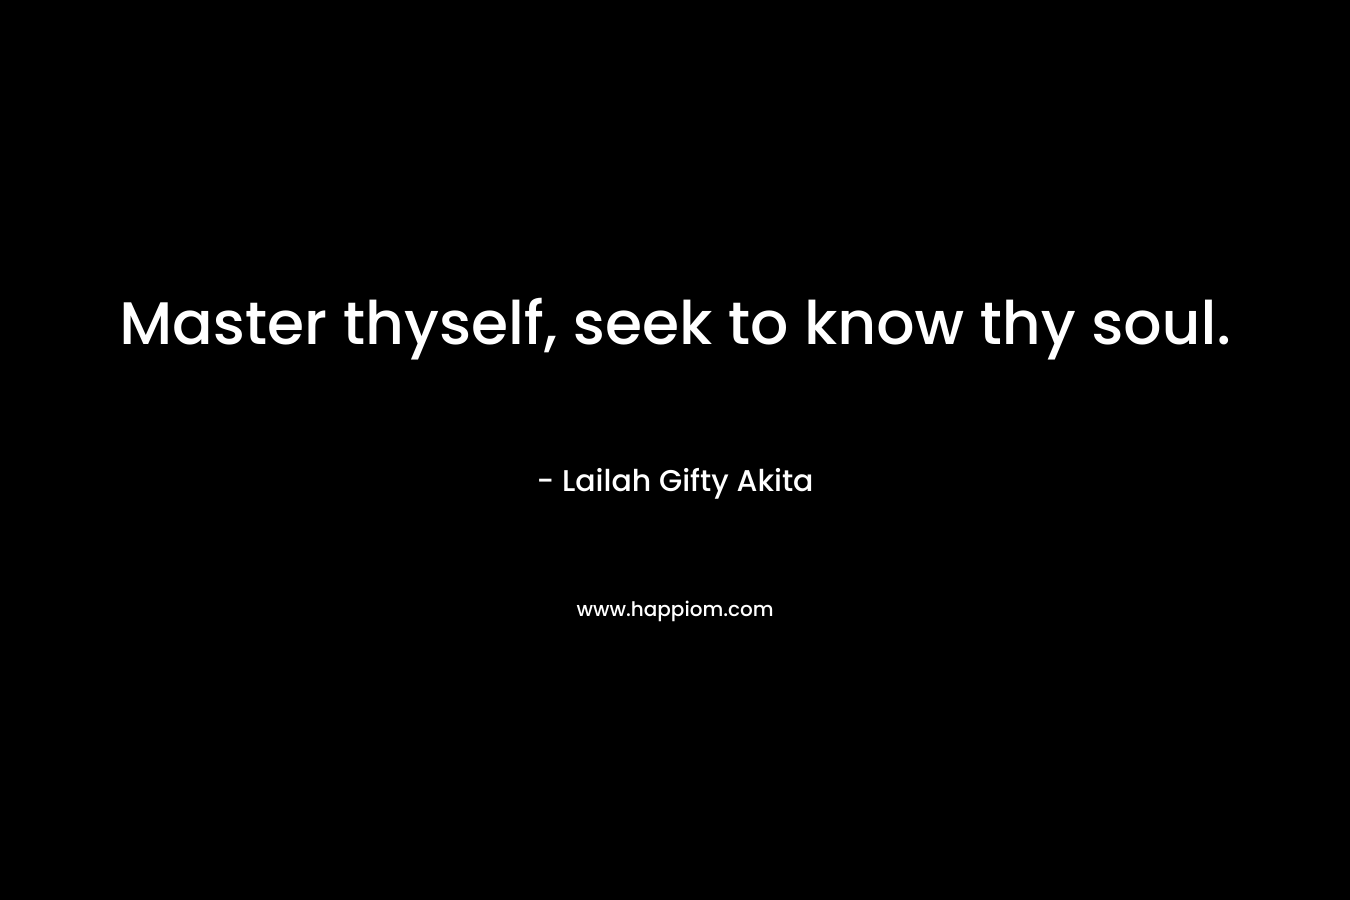 Master thyself, seek to know thy soul.